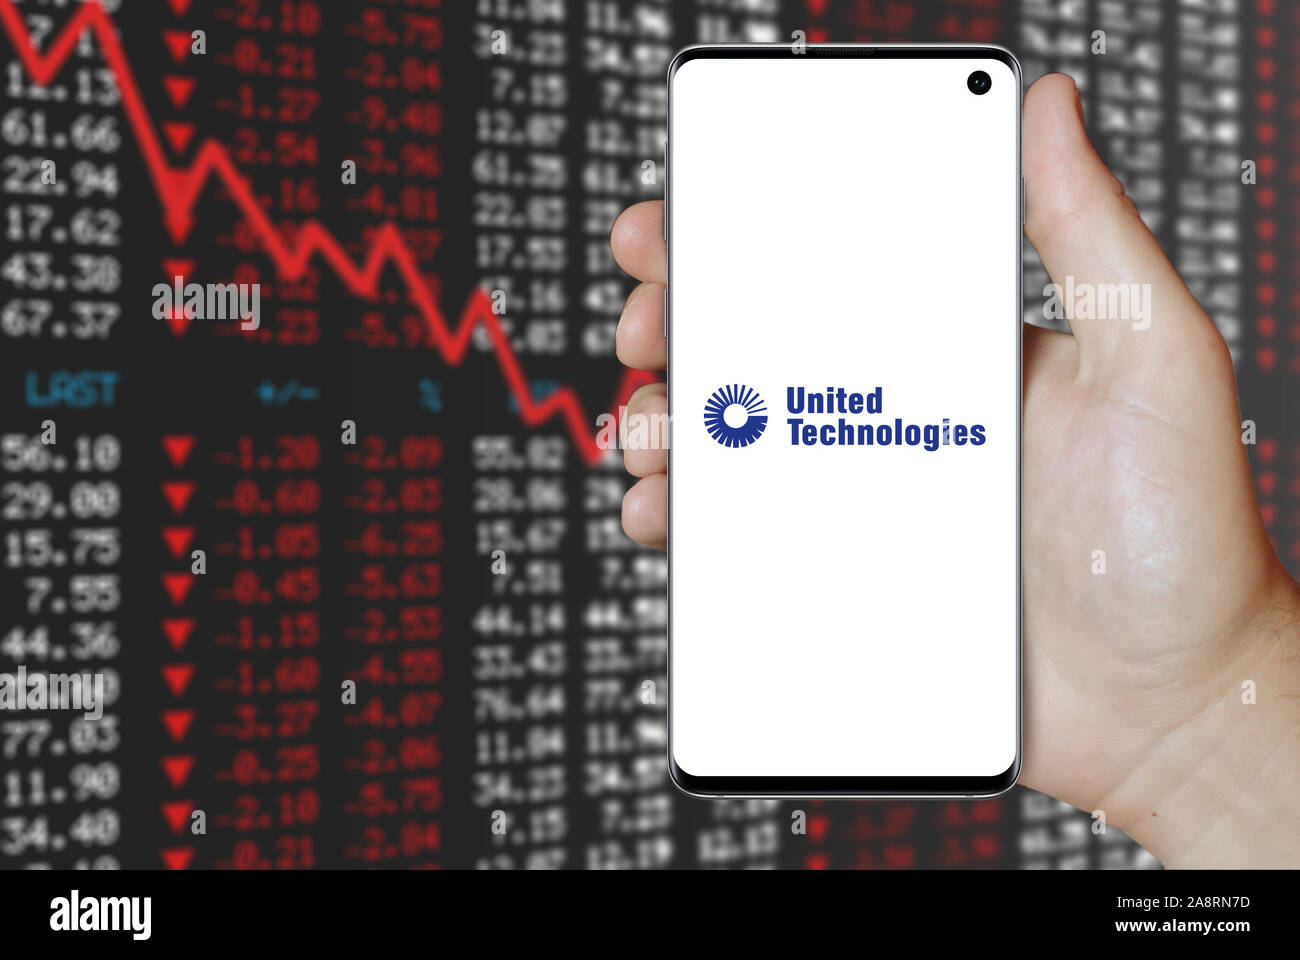 Logo of public company United Technologies displayed on a smartphone. Negative stock market background. Credit: PIXDUCE Stock Photo